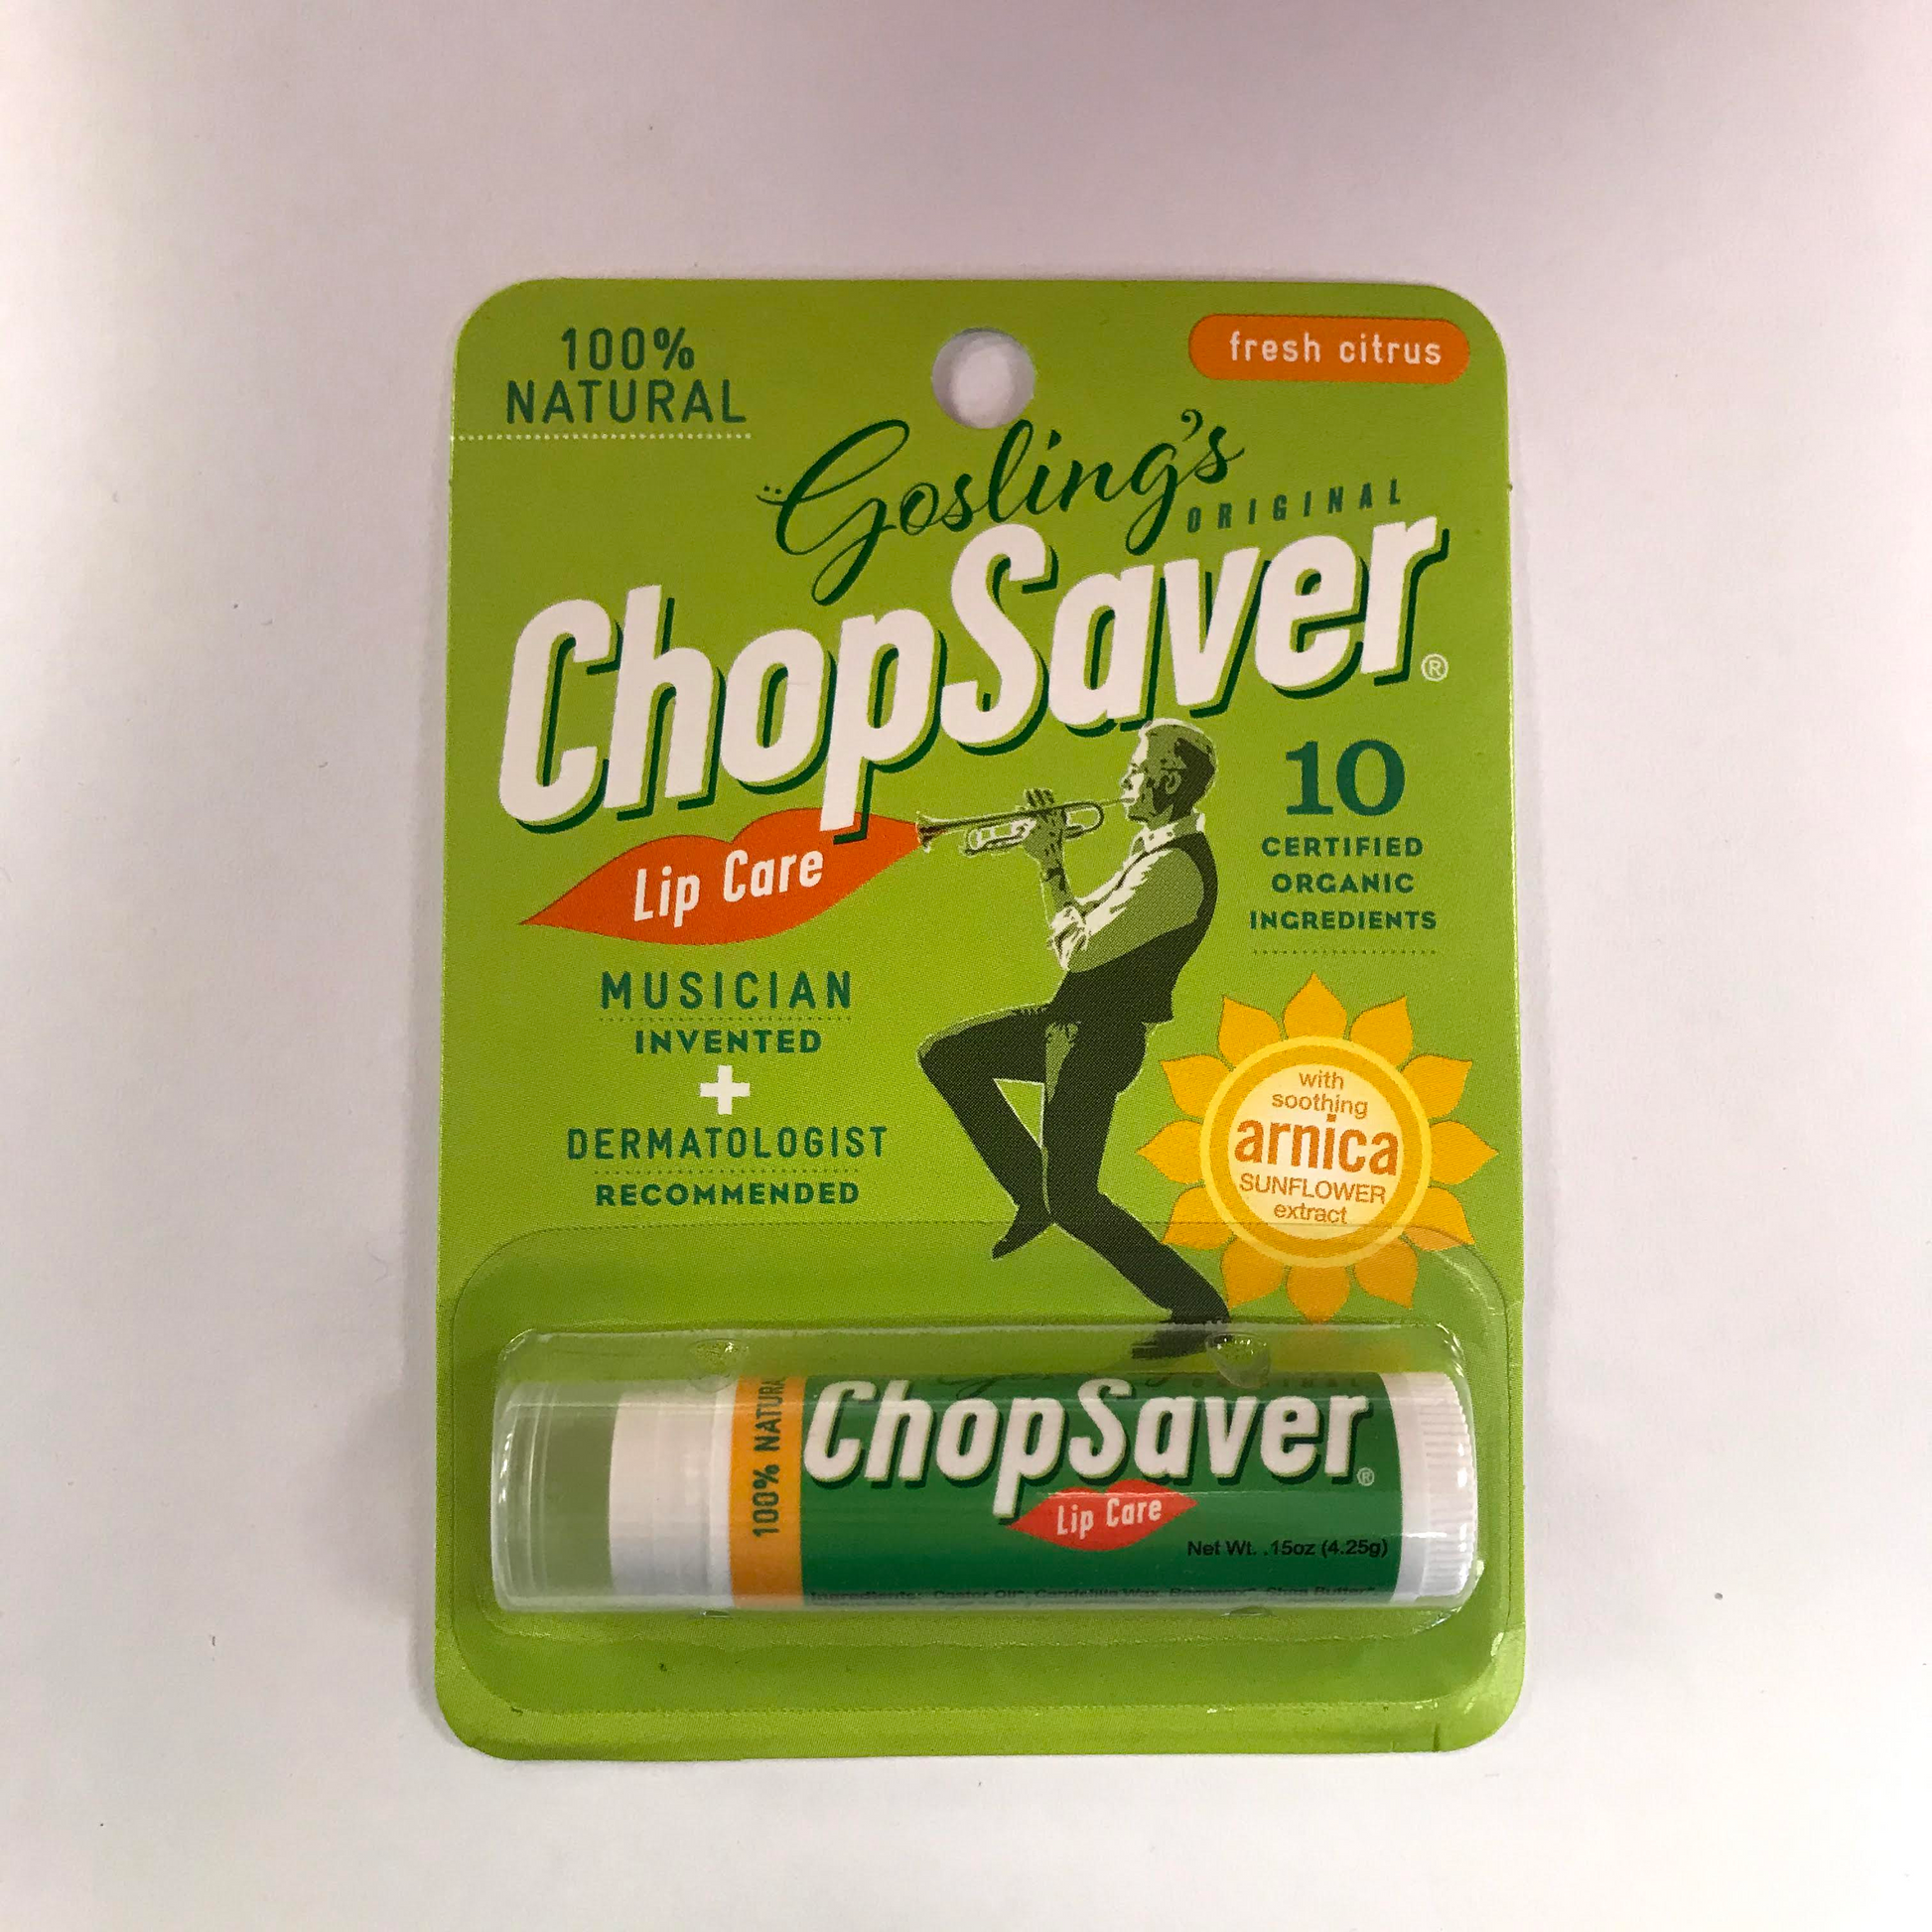 ChopSaver